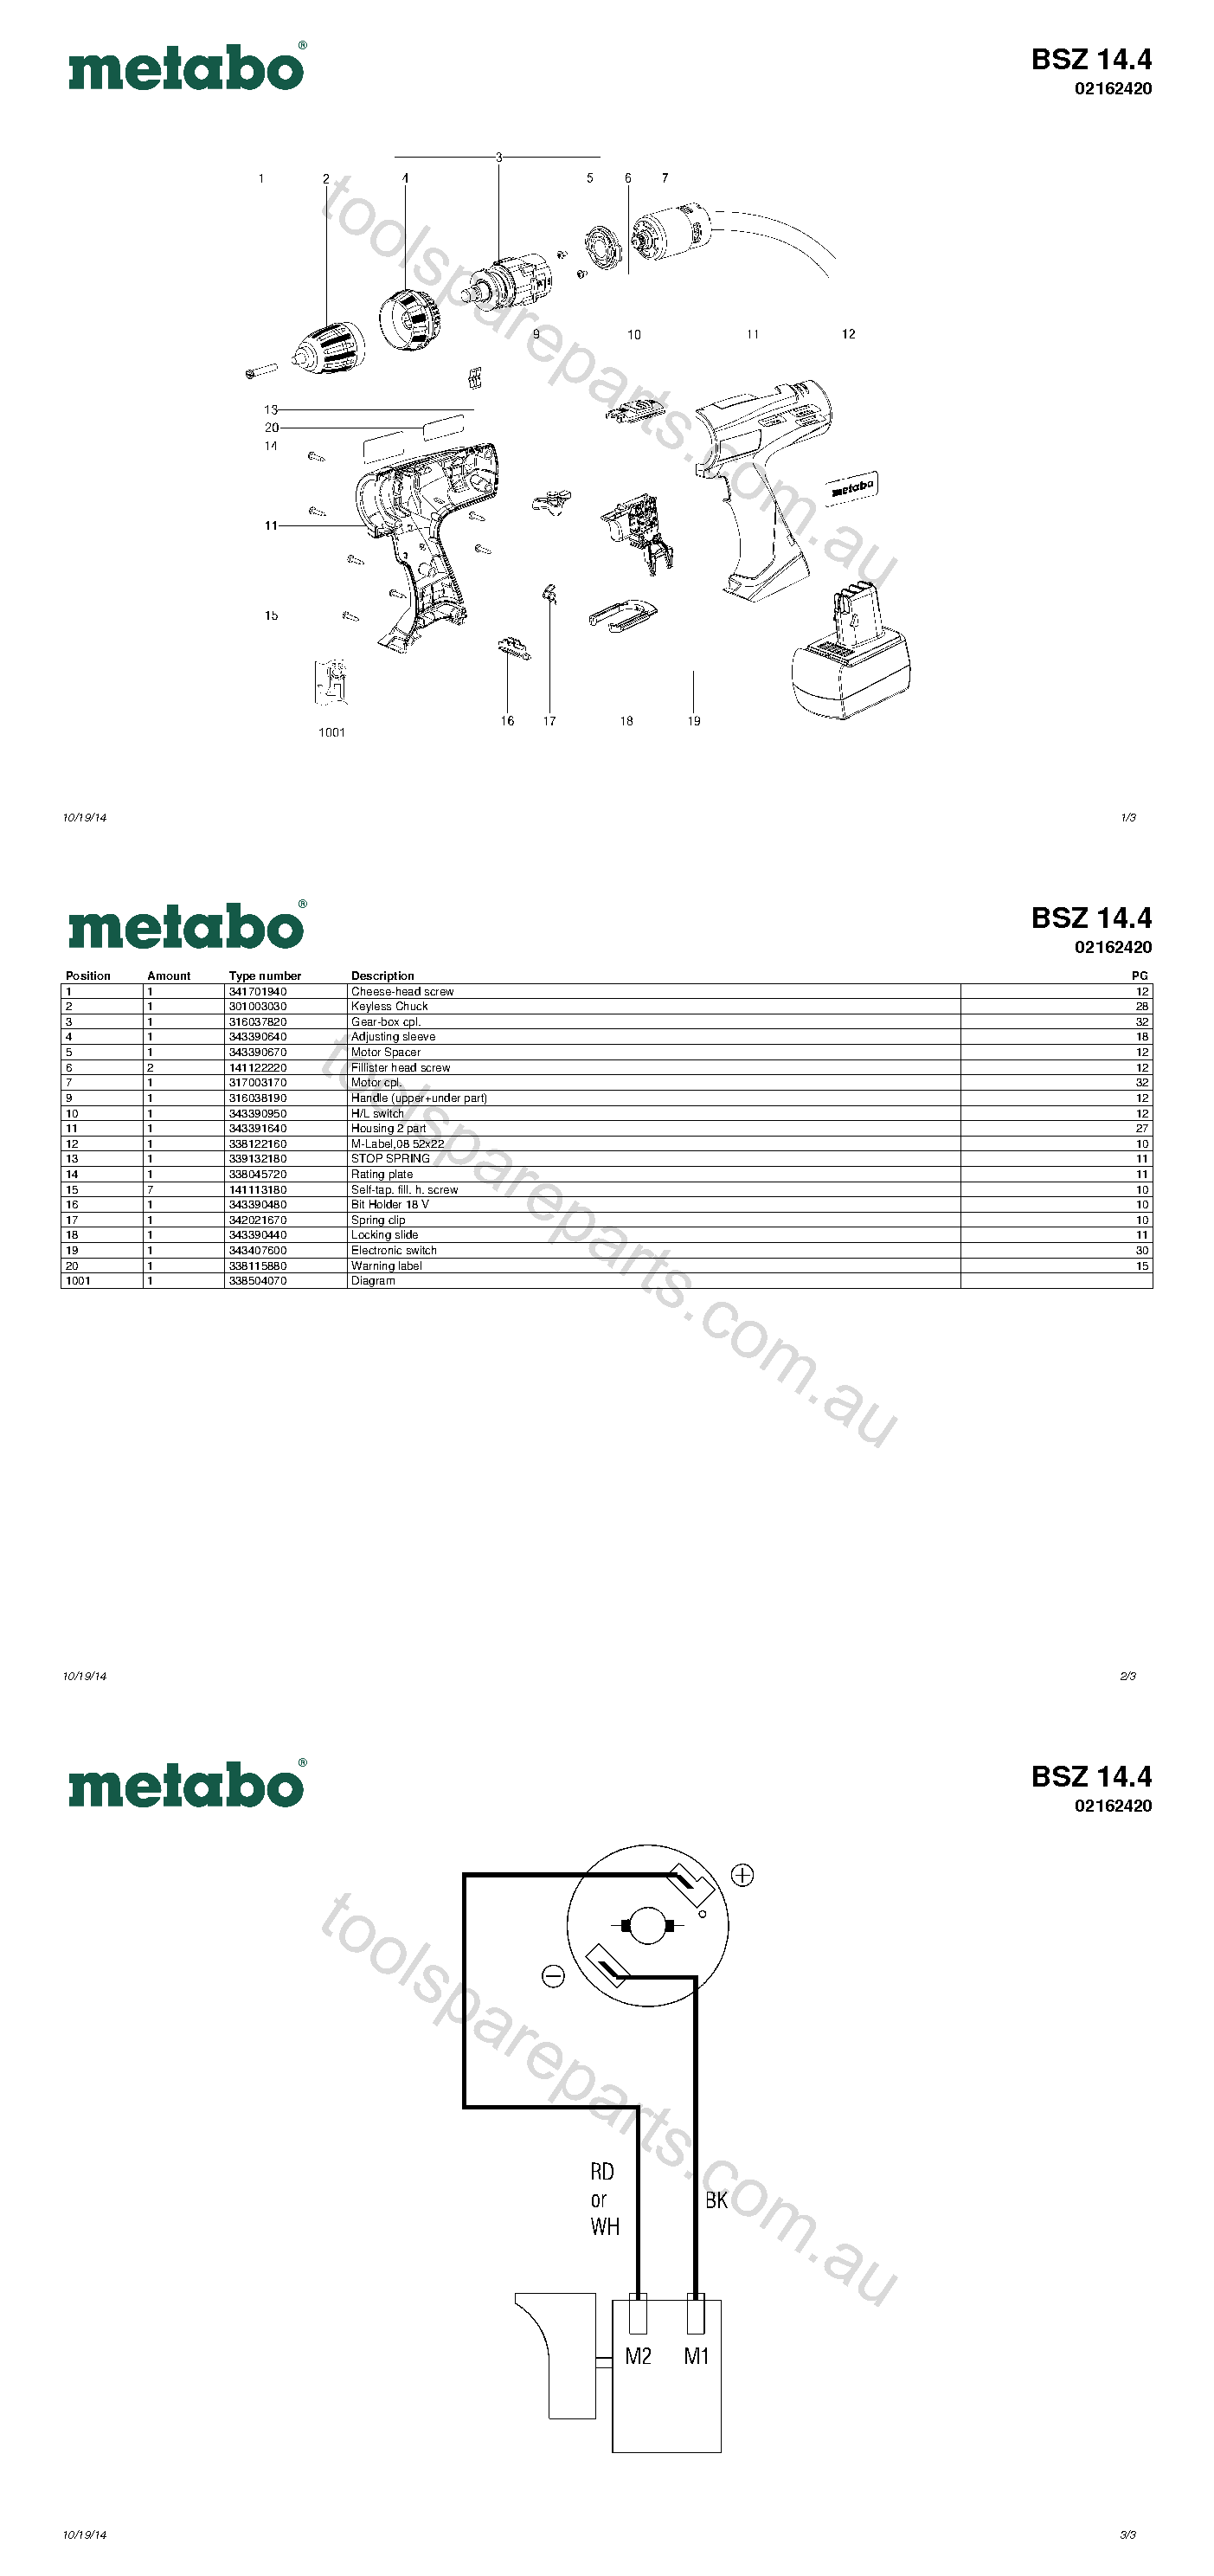 Metabo BSZ 14.4 02162420  Diagram 1